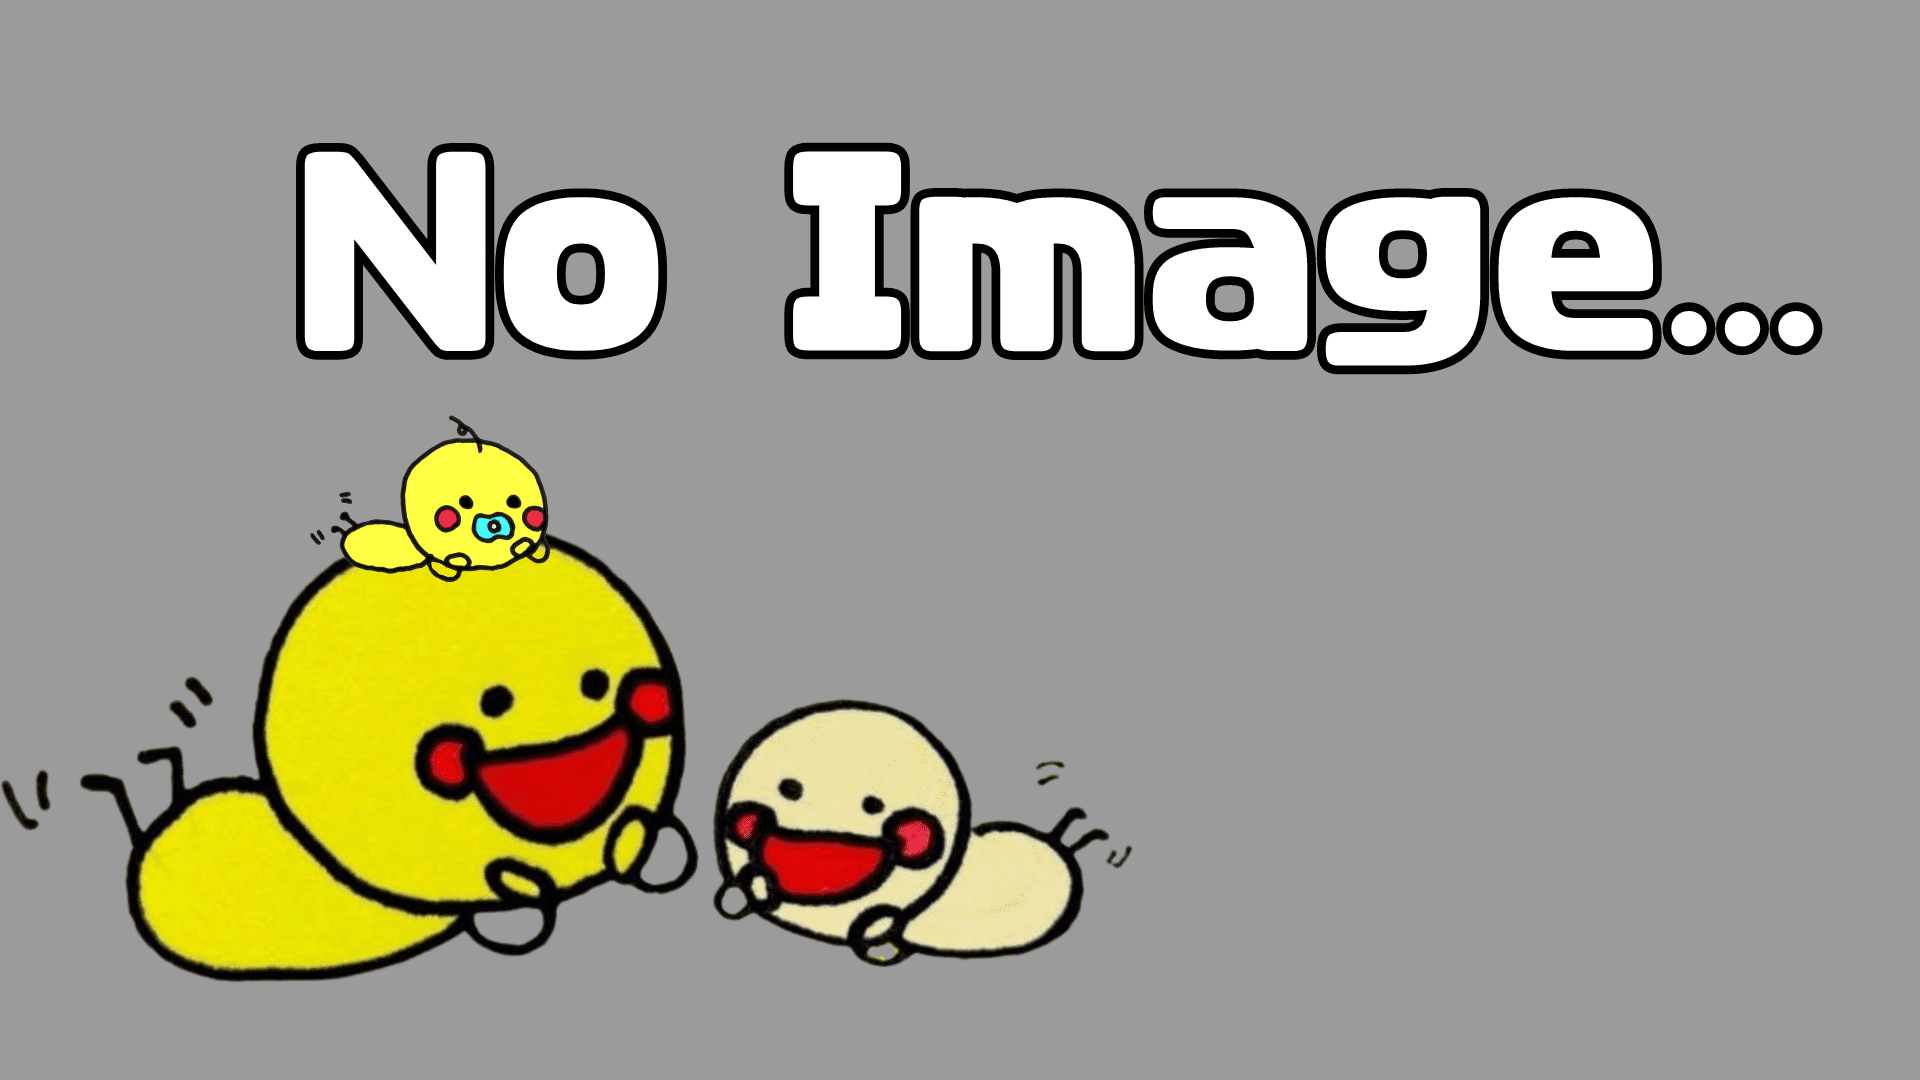 no image